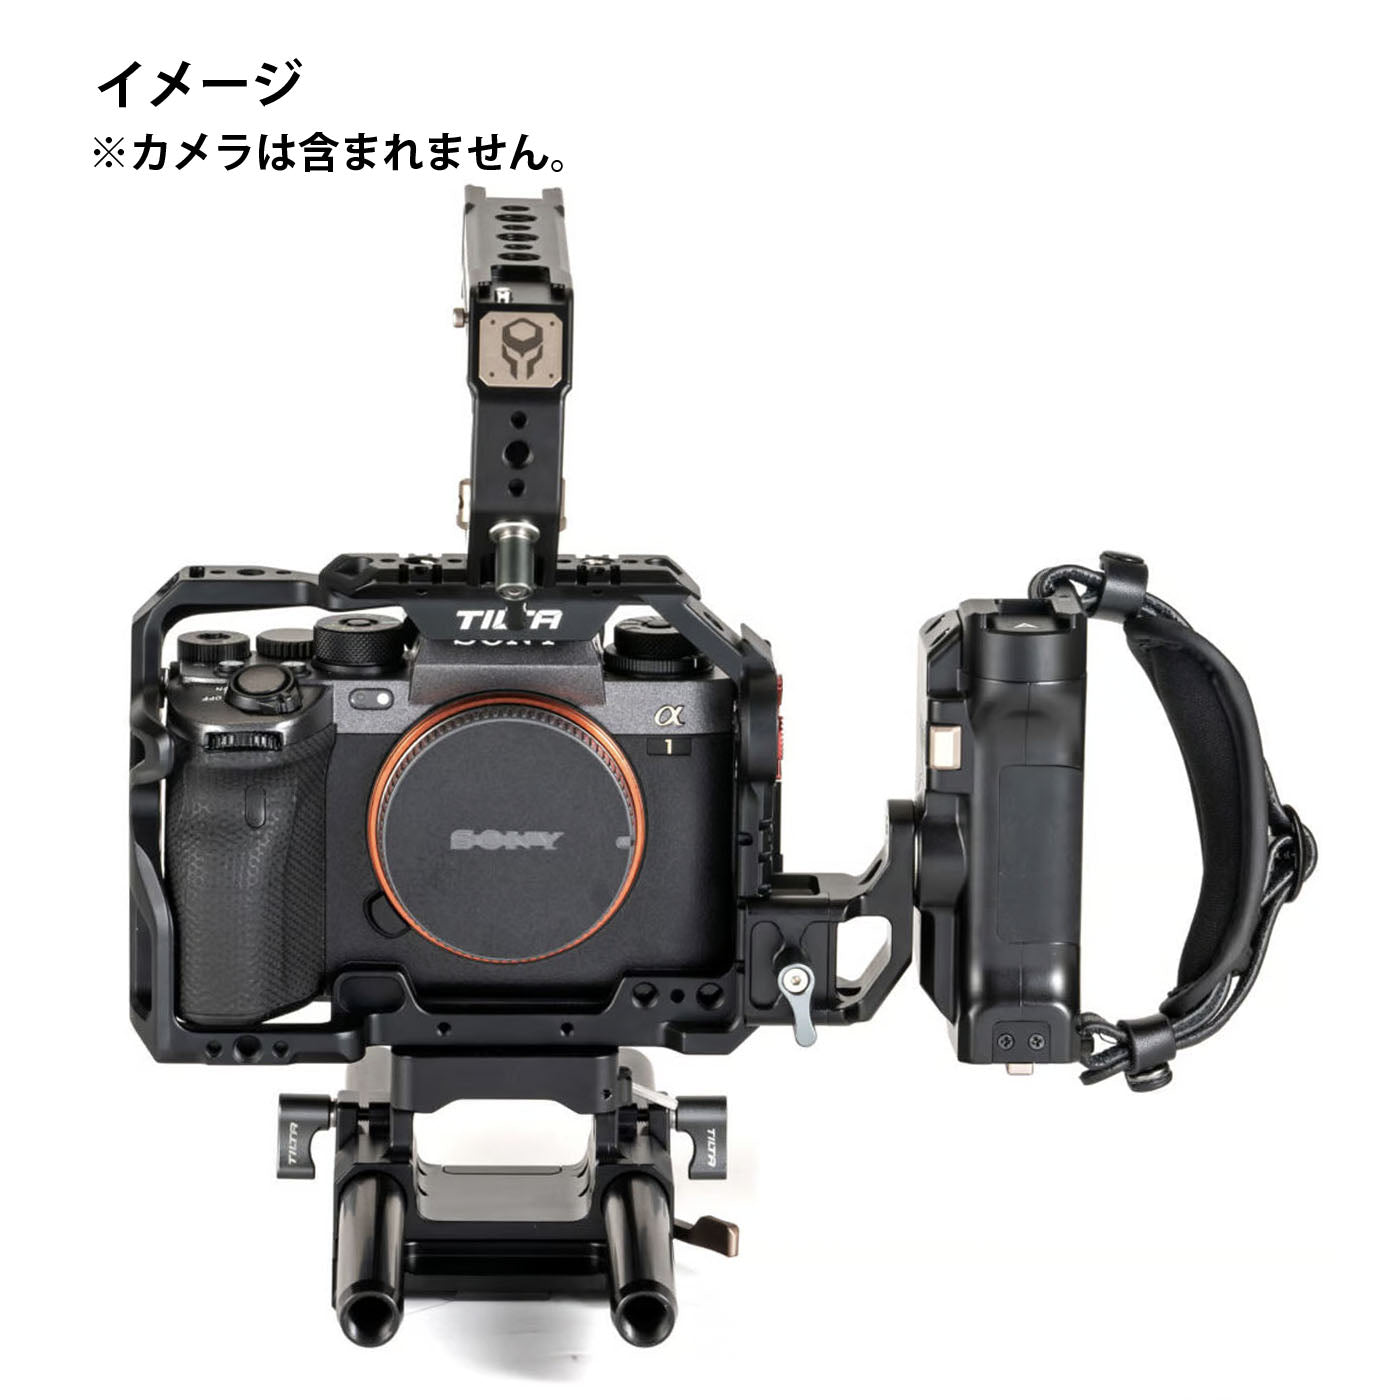 TILTA(ティルタ) Tiltaing Sony a1 Pro Kit - Black TA-T23-A-B